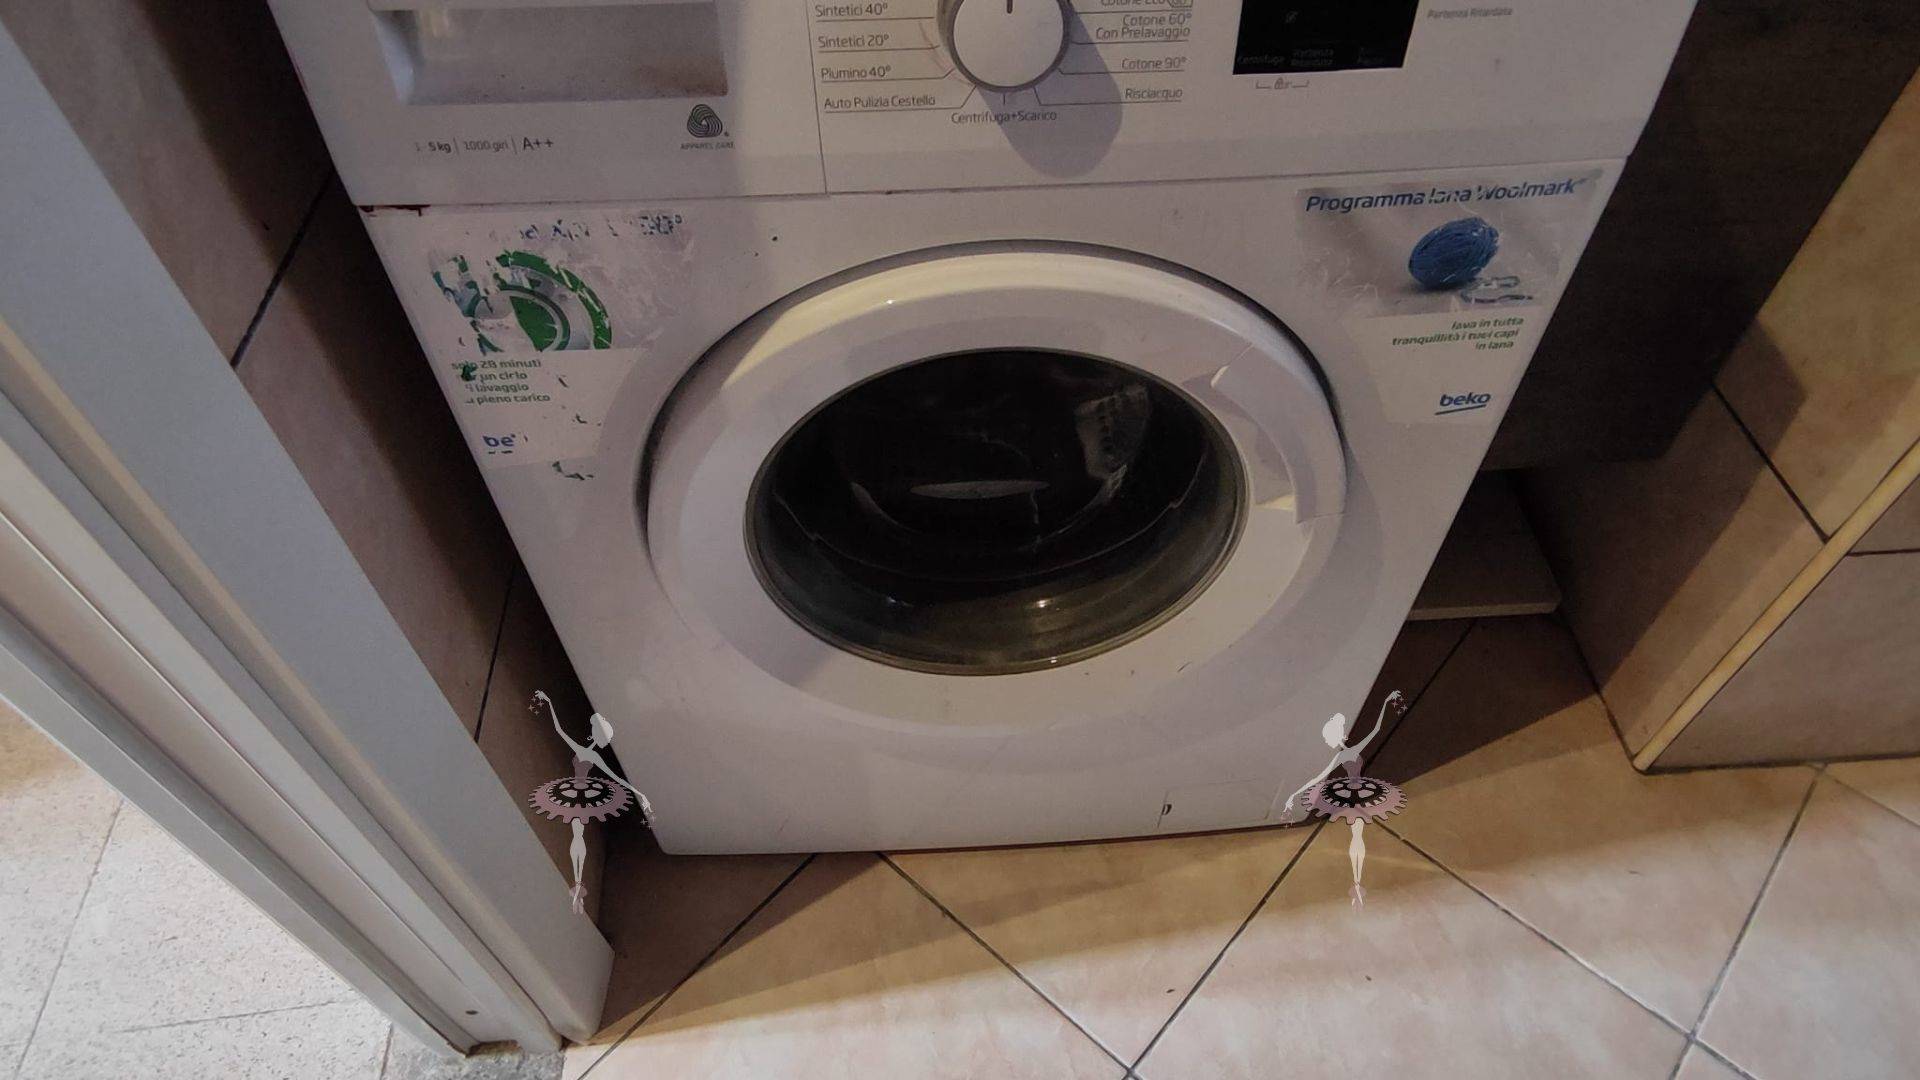 Dettagli lavatrice